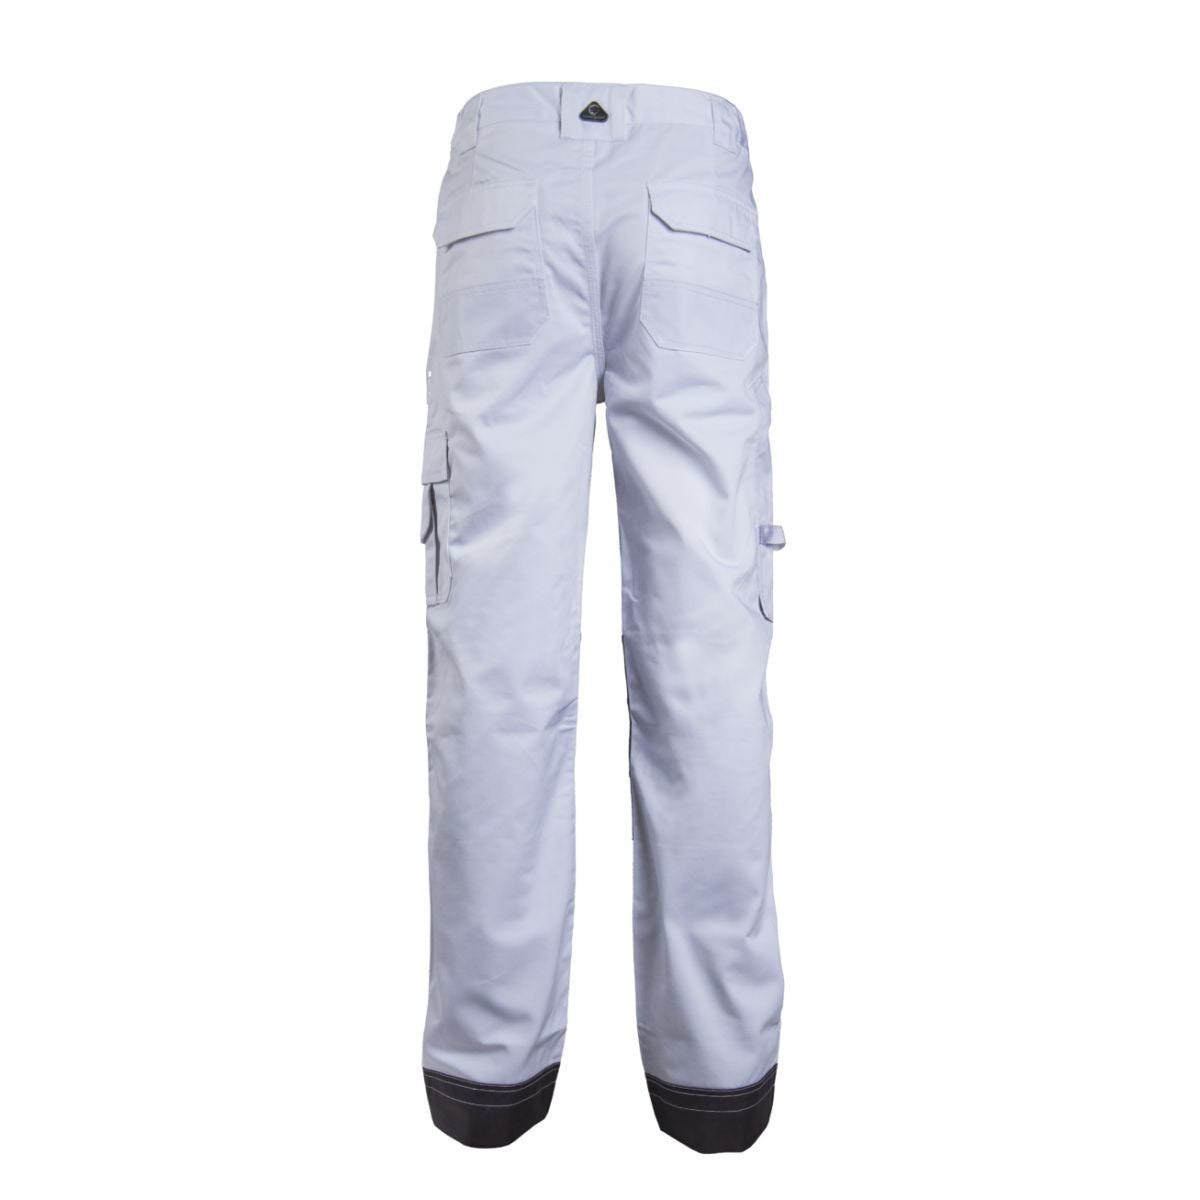 Pantalon CLASS blanc - COVERGUARD - Taille 3XL 1